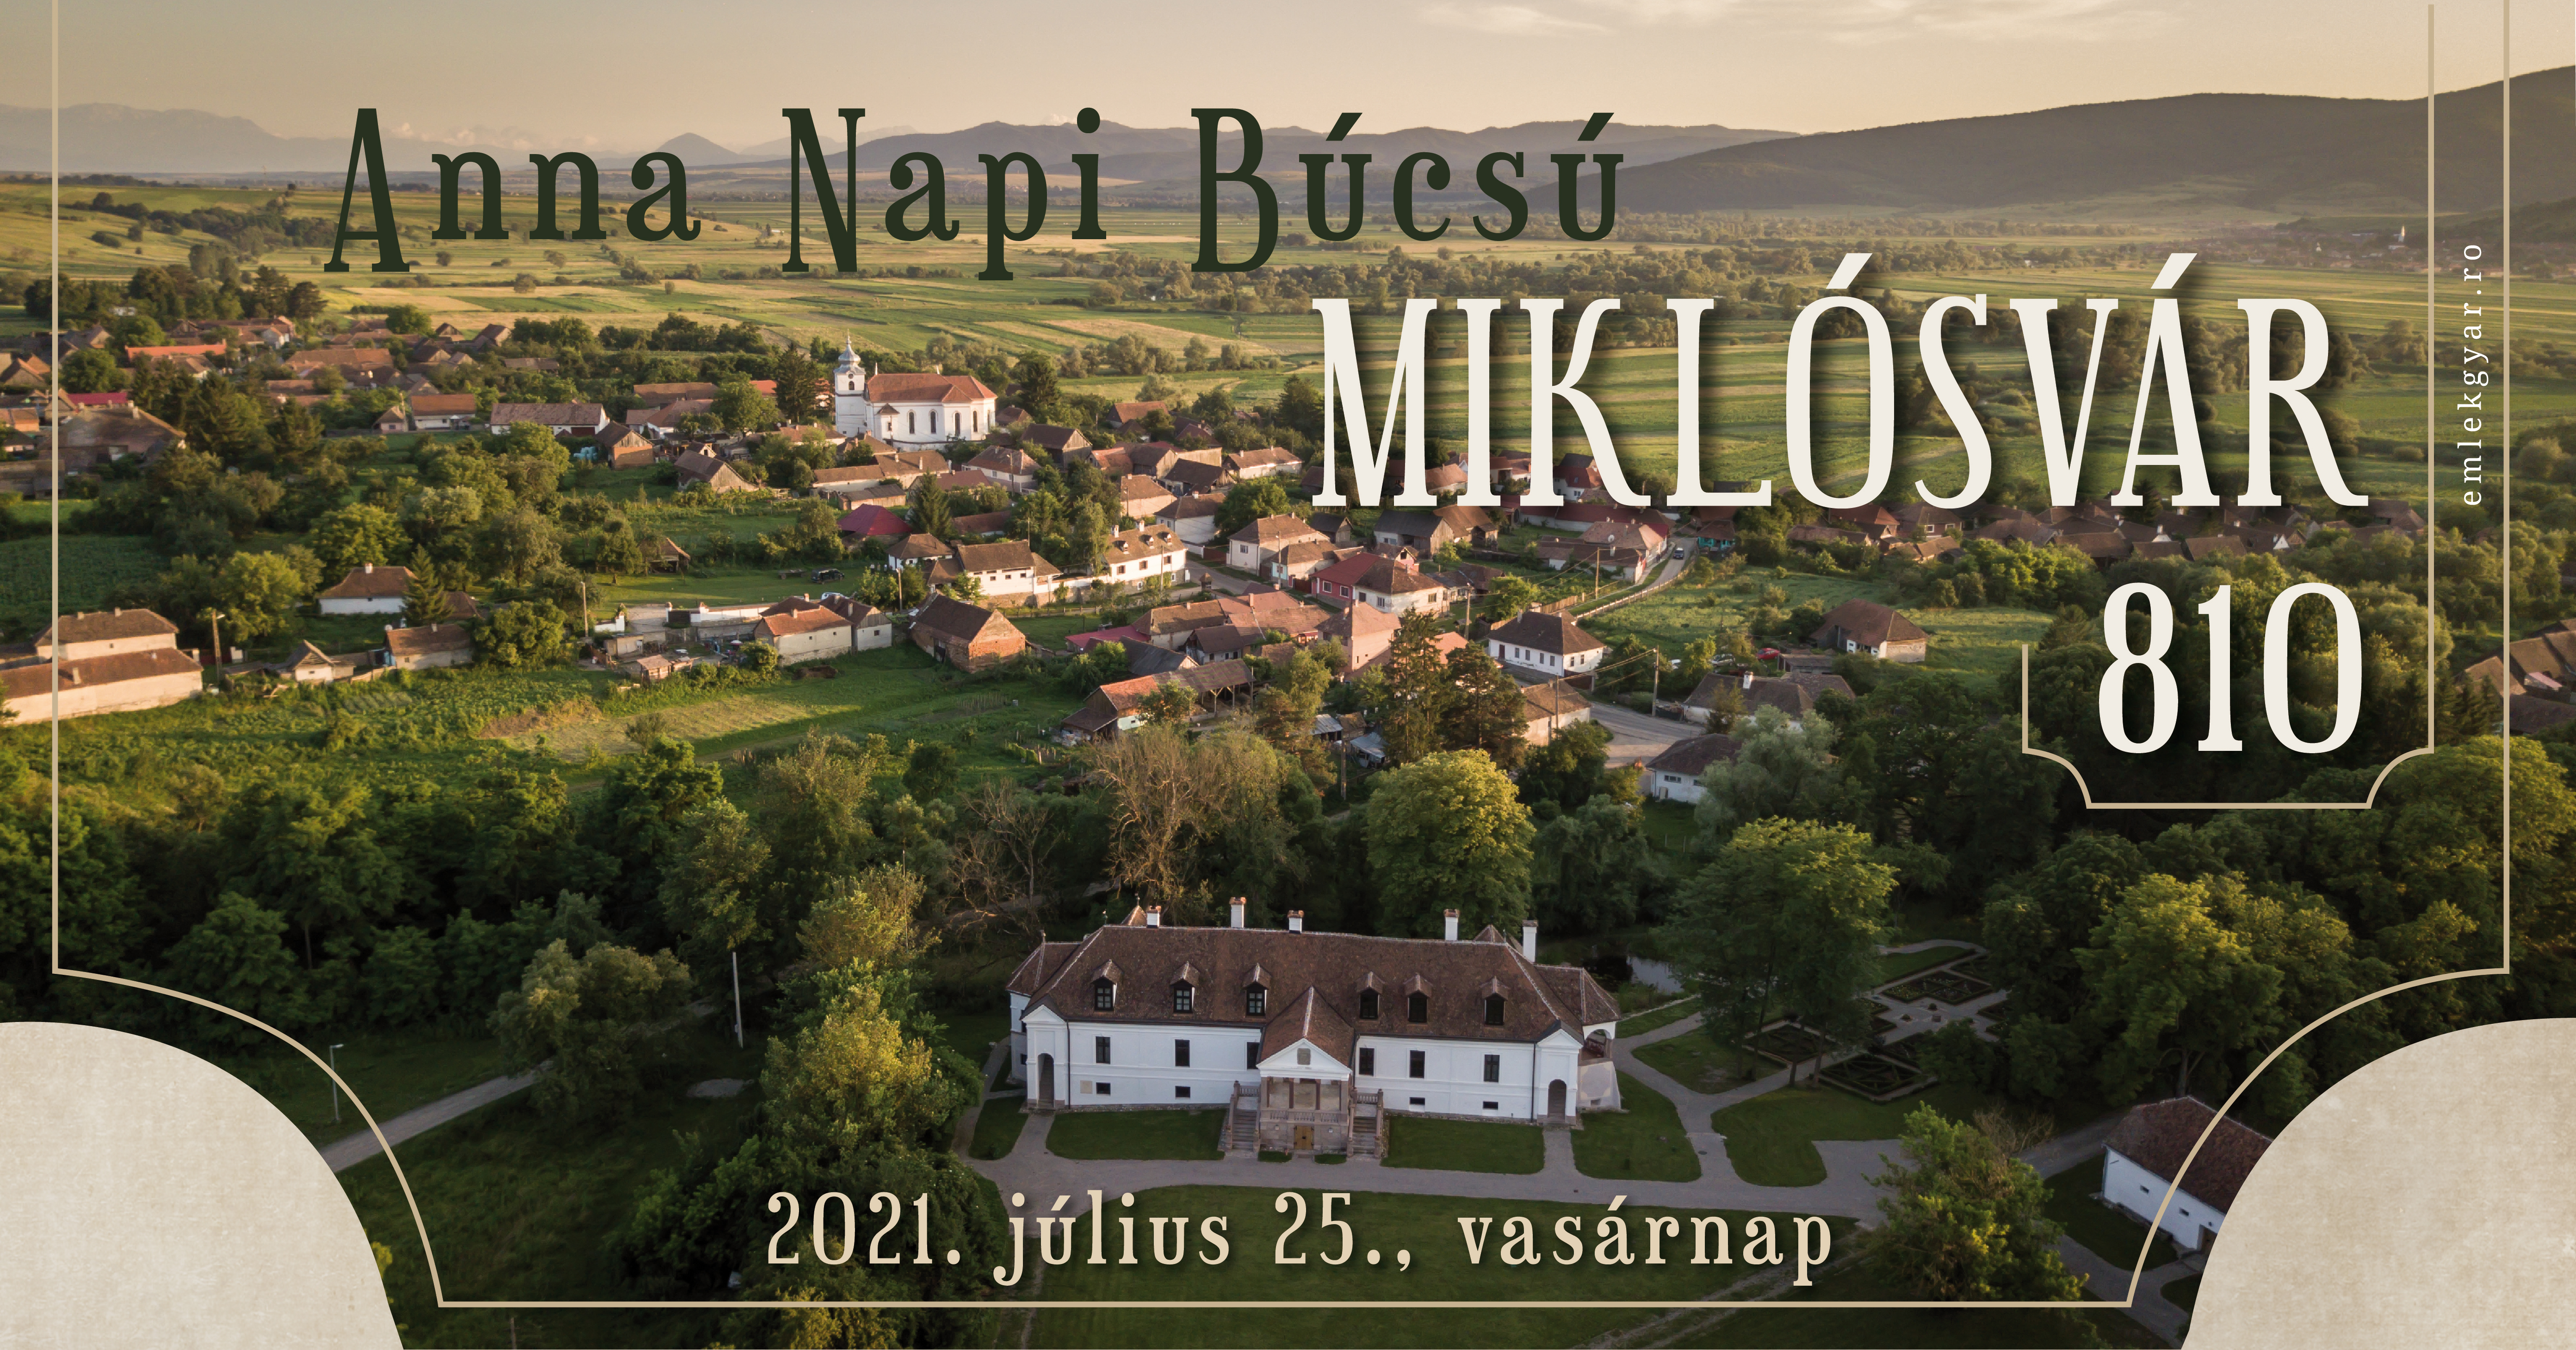 Micloșoara 810 - Pilgrimage for St. Anne's Day